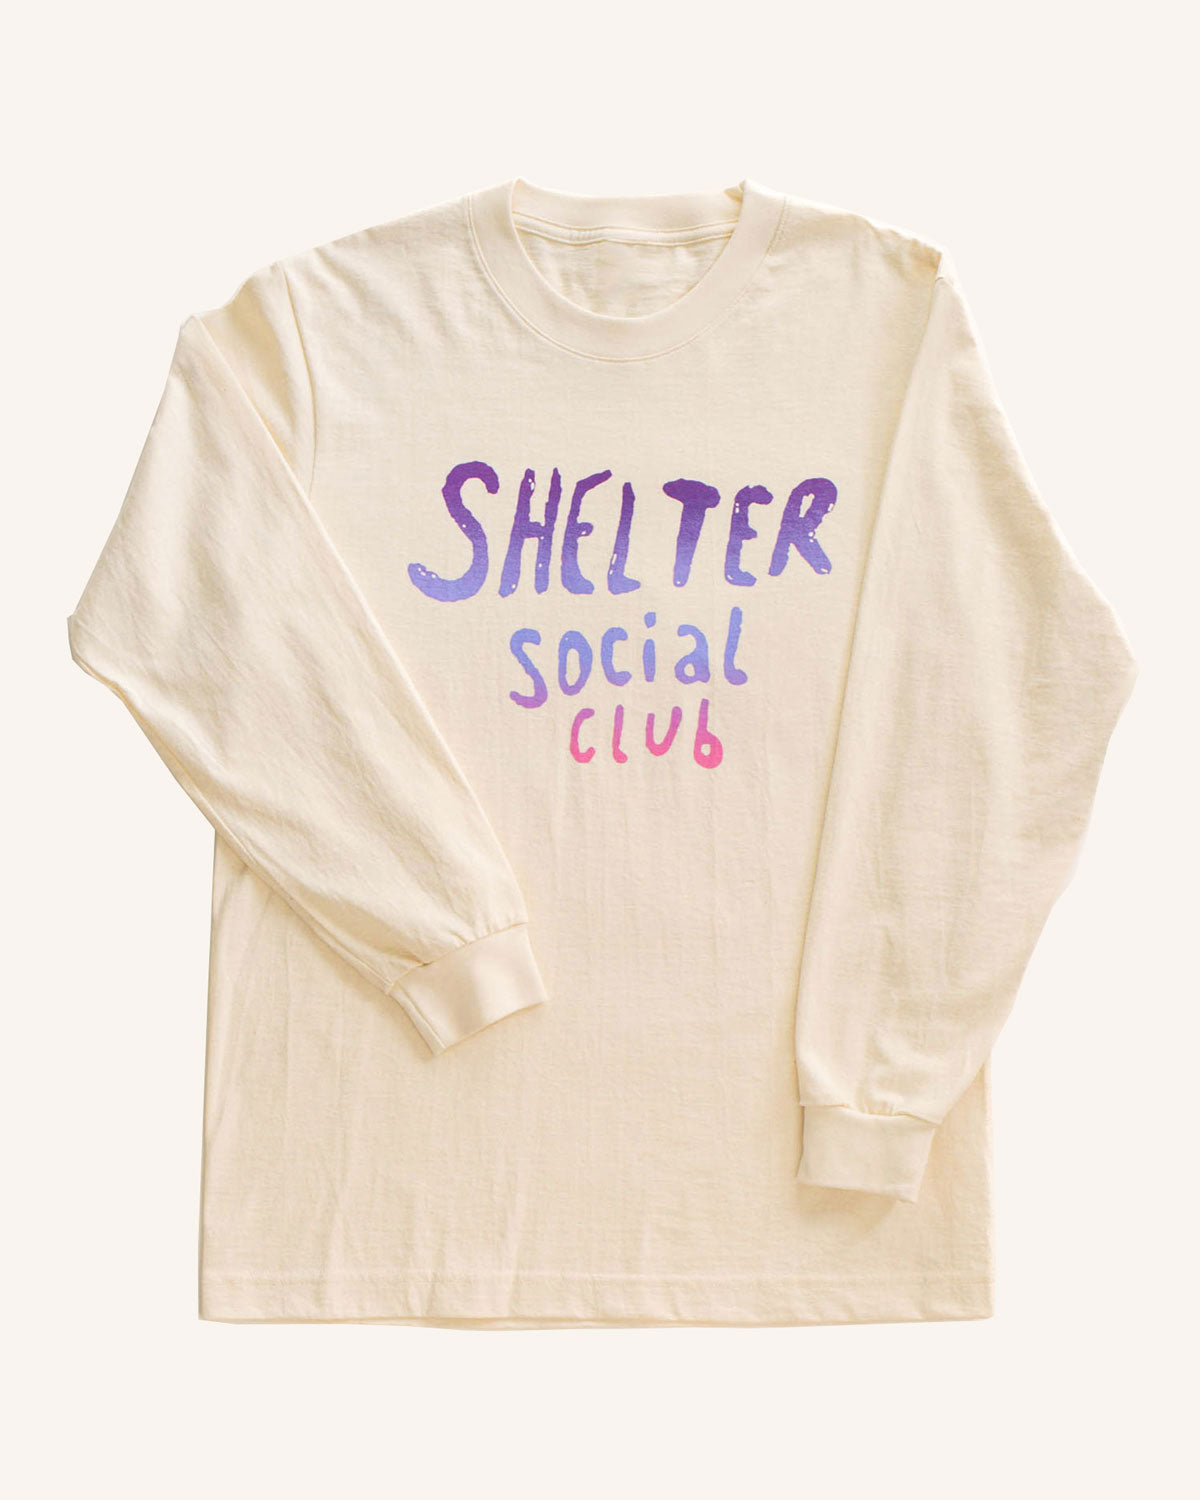 Shelter Social Club L/S Tee - Shelter Social Club